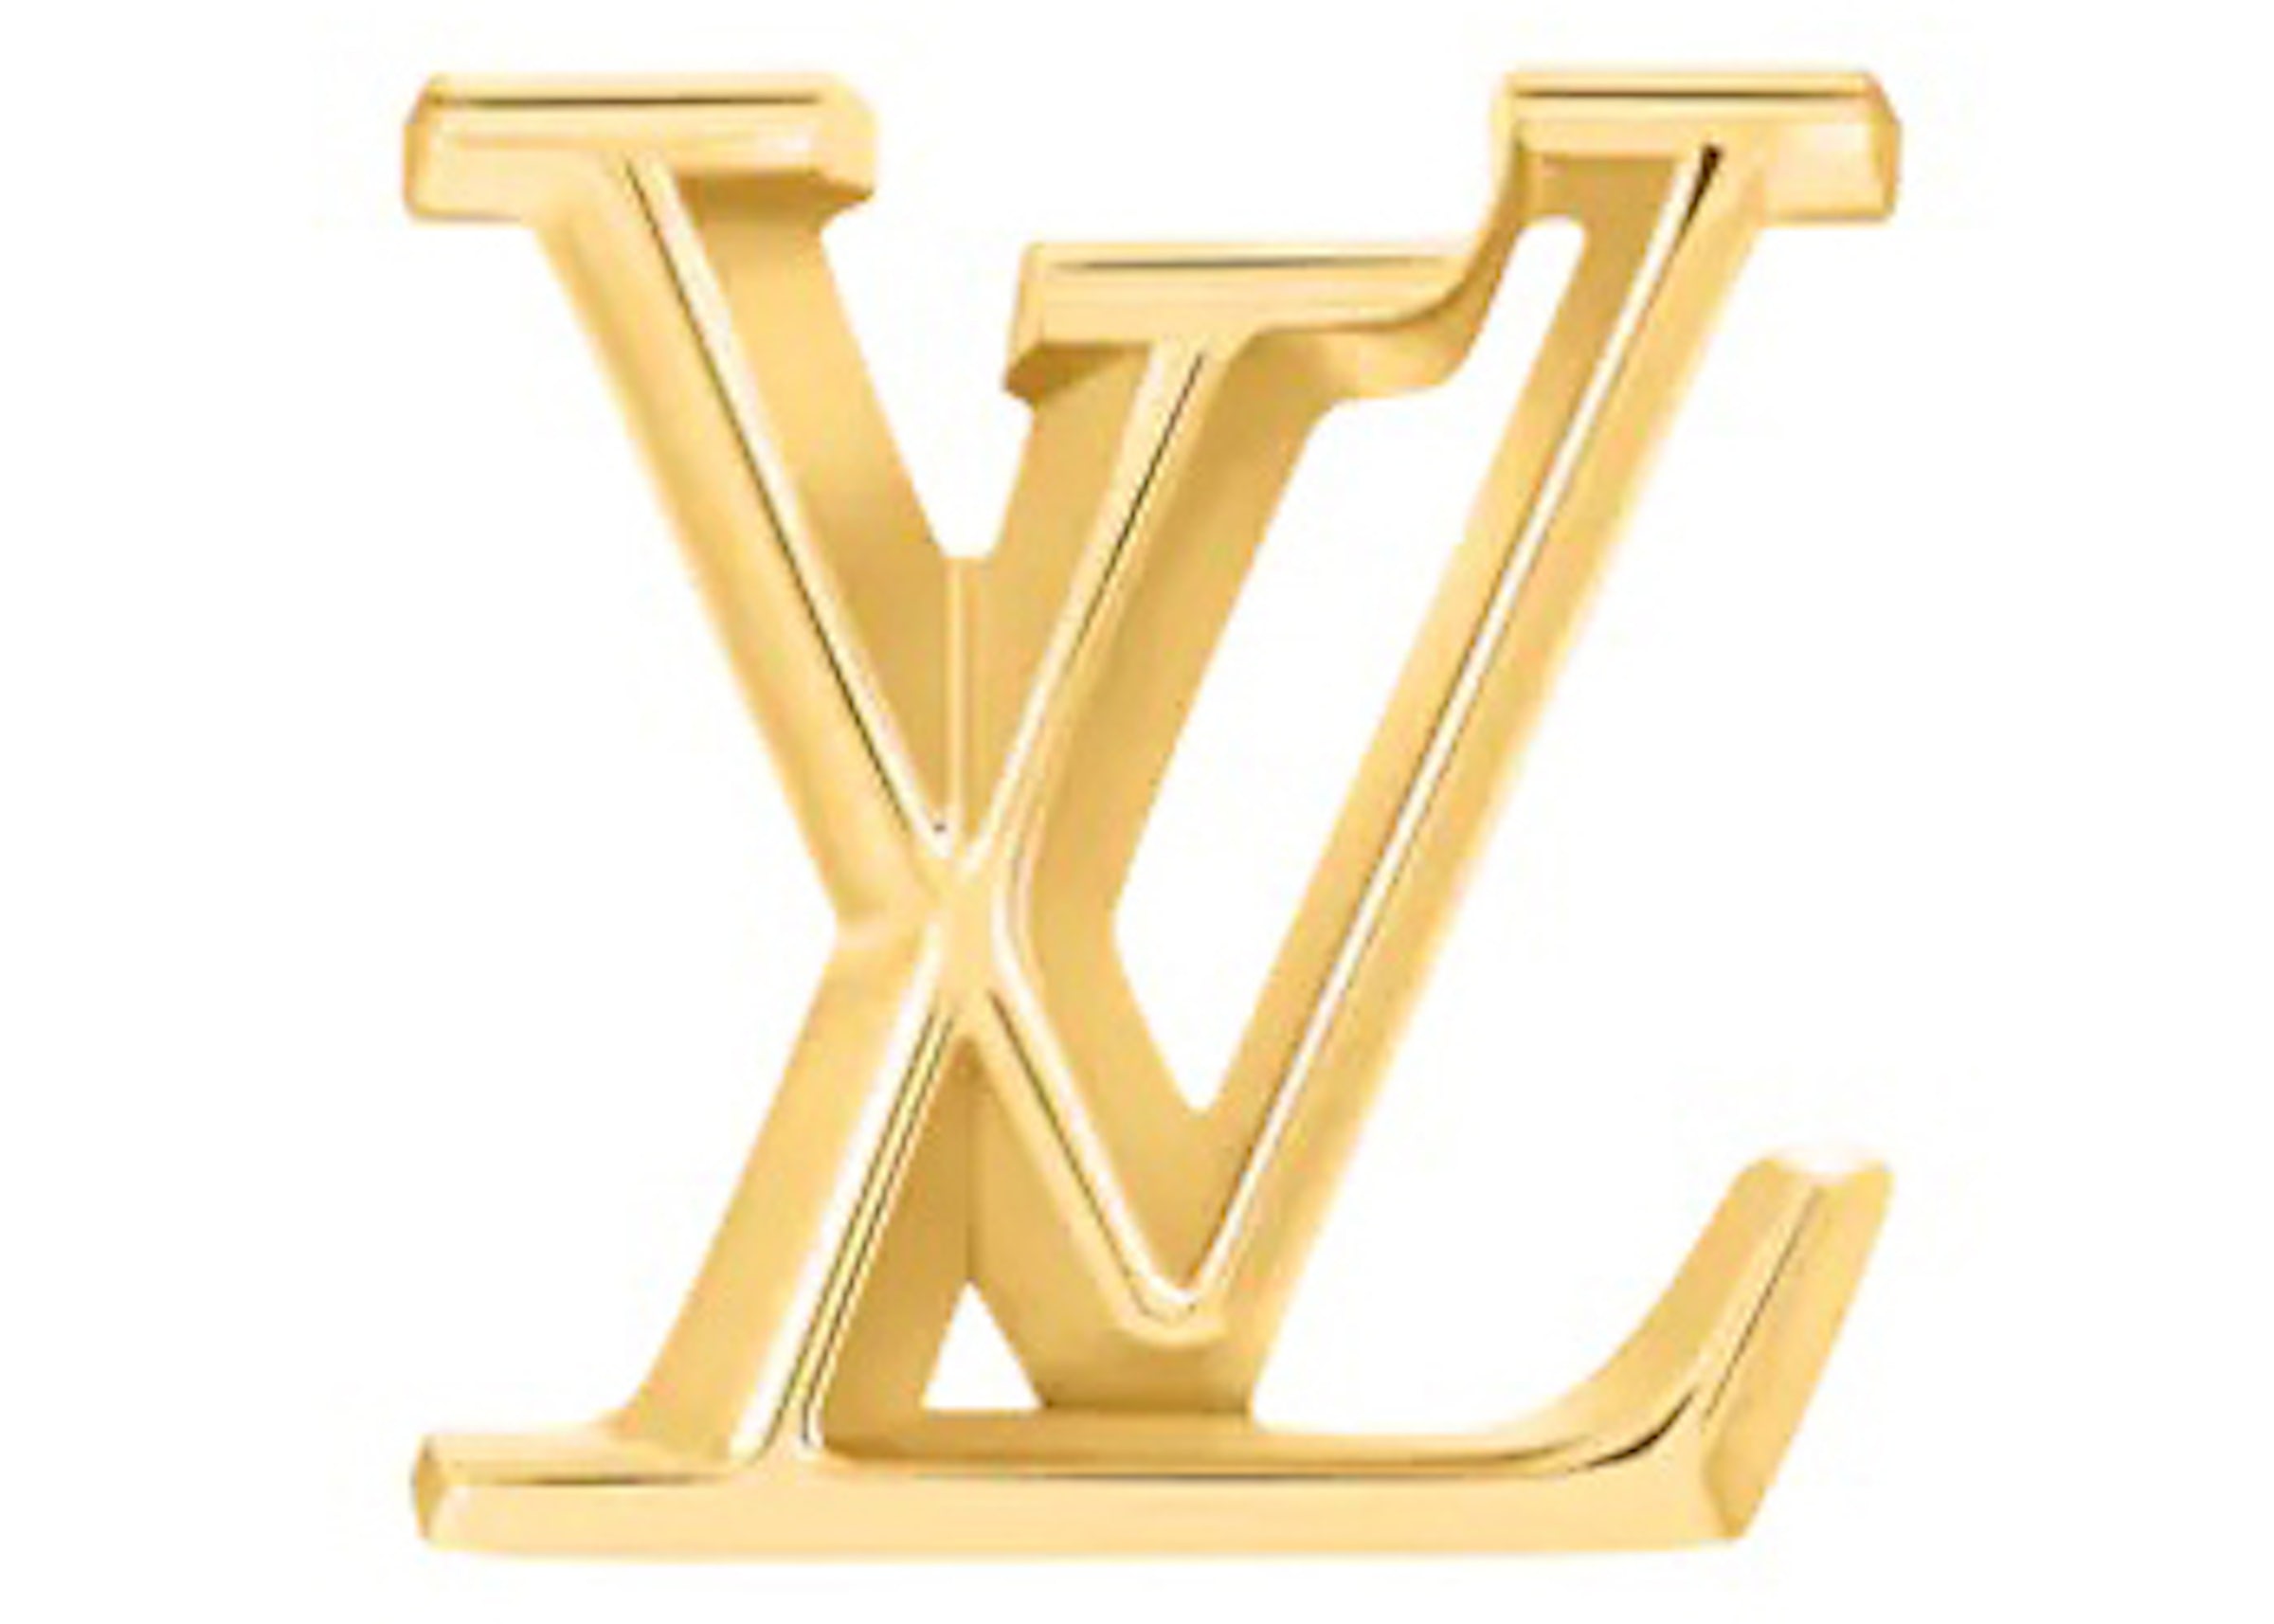 LOUIS VUITTON IDYLLE BLOSSOM MONOGRAM Bracelet XS 18K White Gold